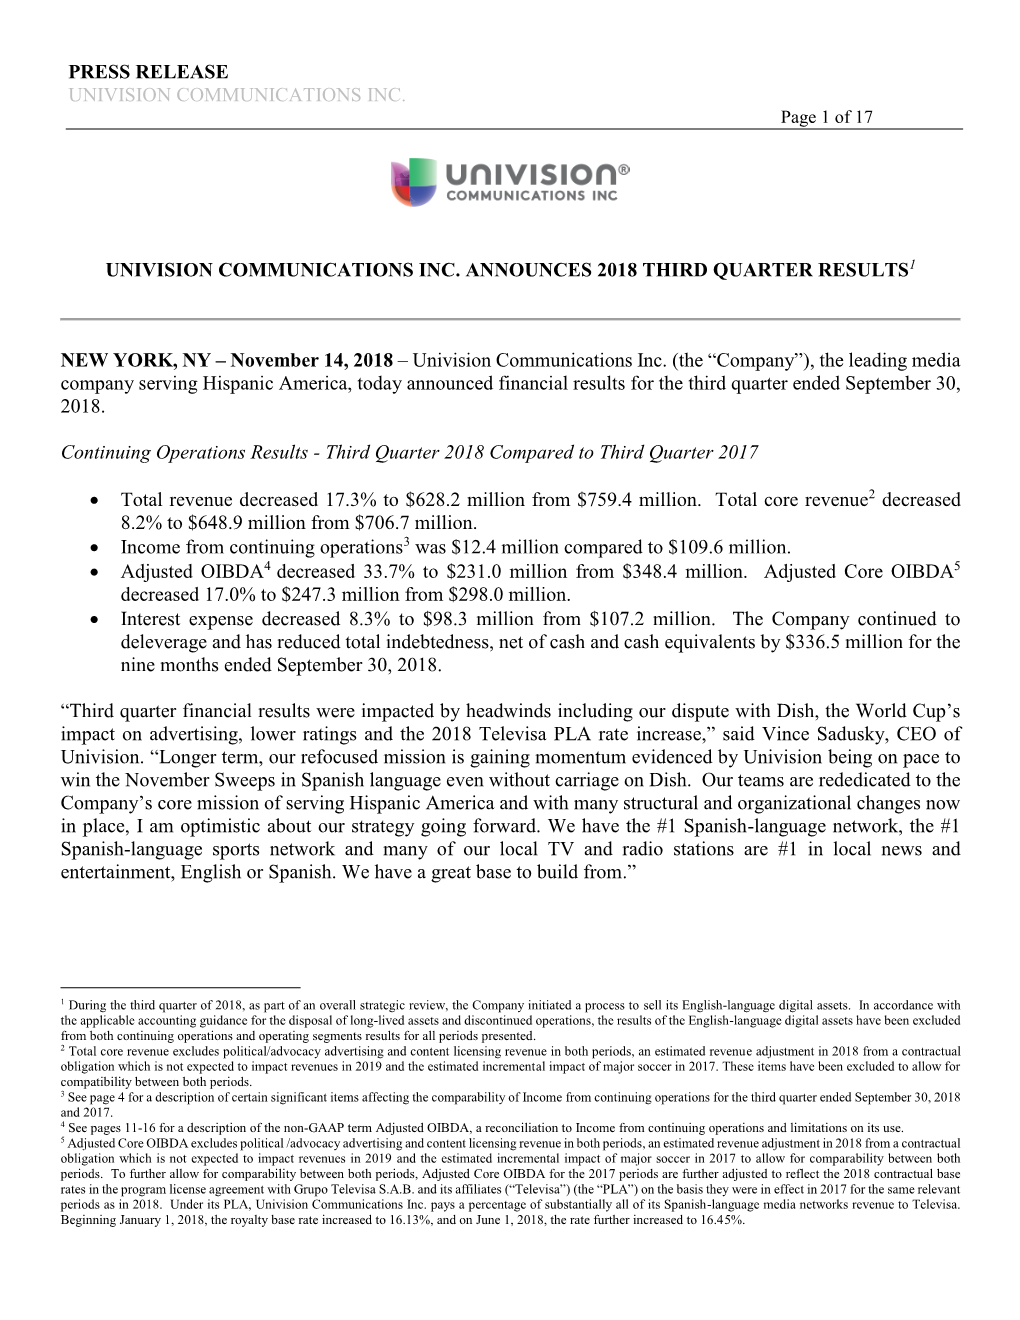 Press Release Univision Communications Inc. Univision